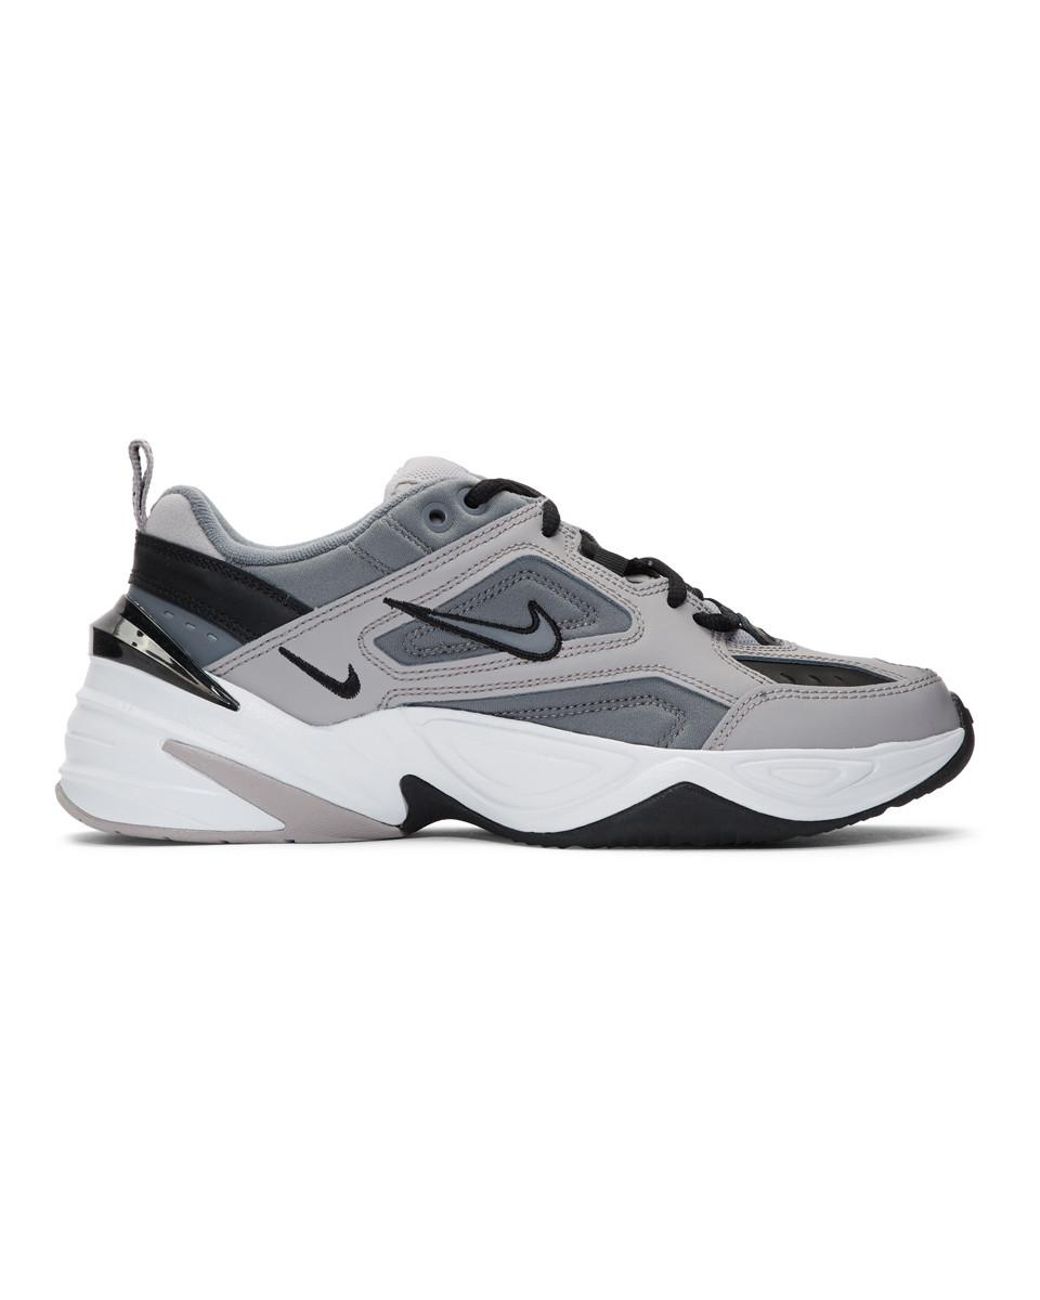 Nike Grey M2k Tekno Sneakers in Gray for Men - Lyst